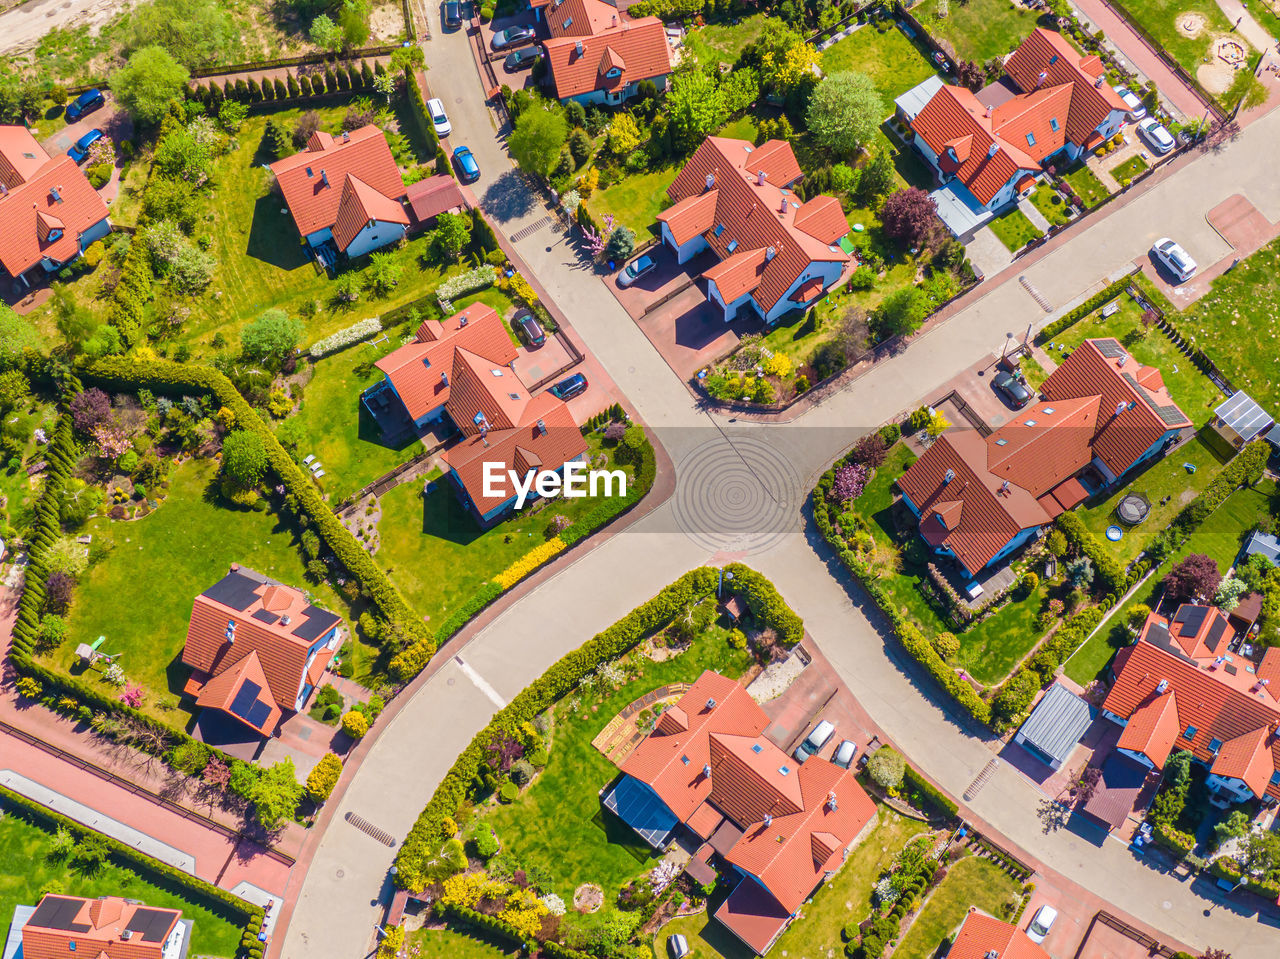 Aerial view of luxury upscale residential neighborhood gated community street real estate single